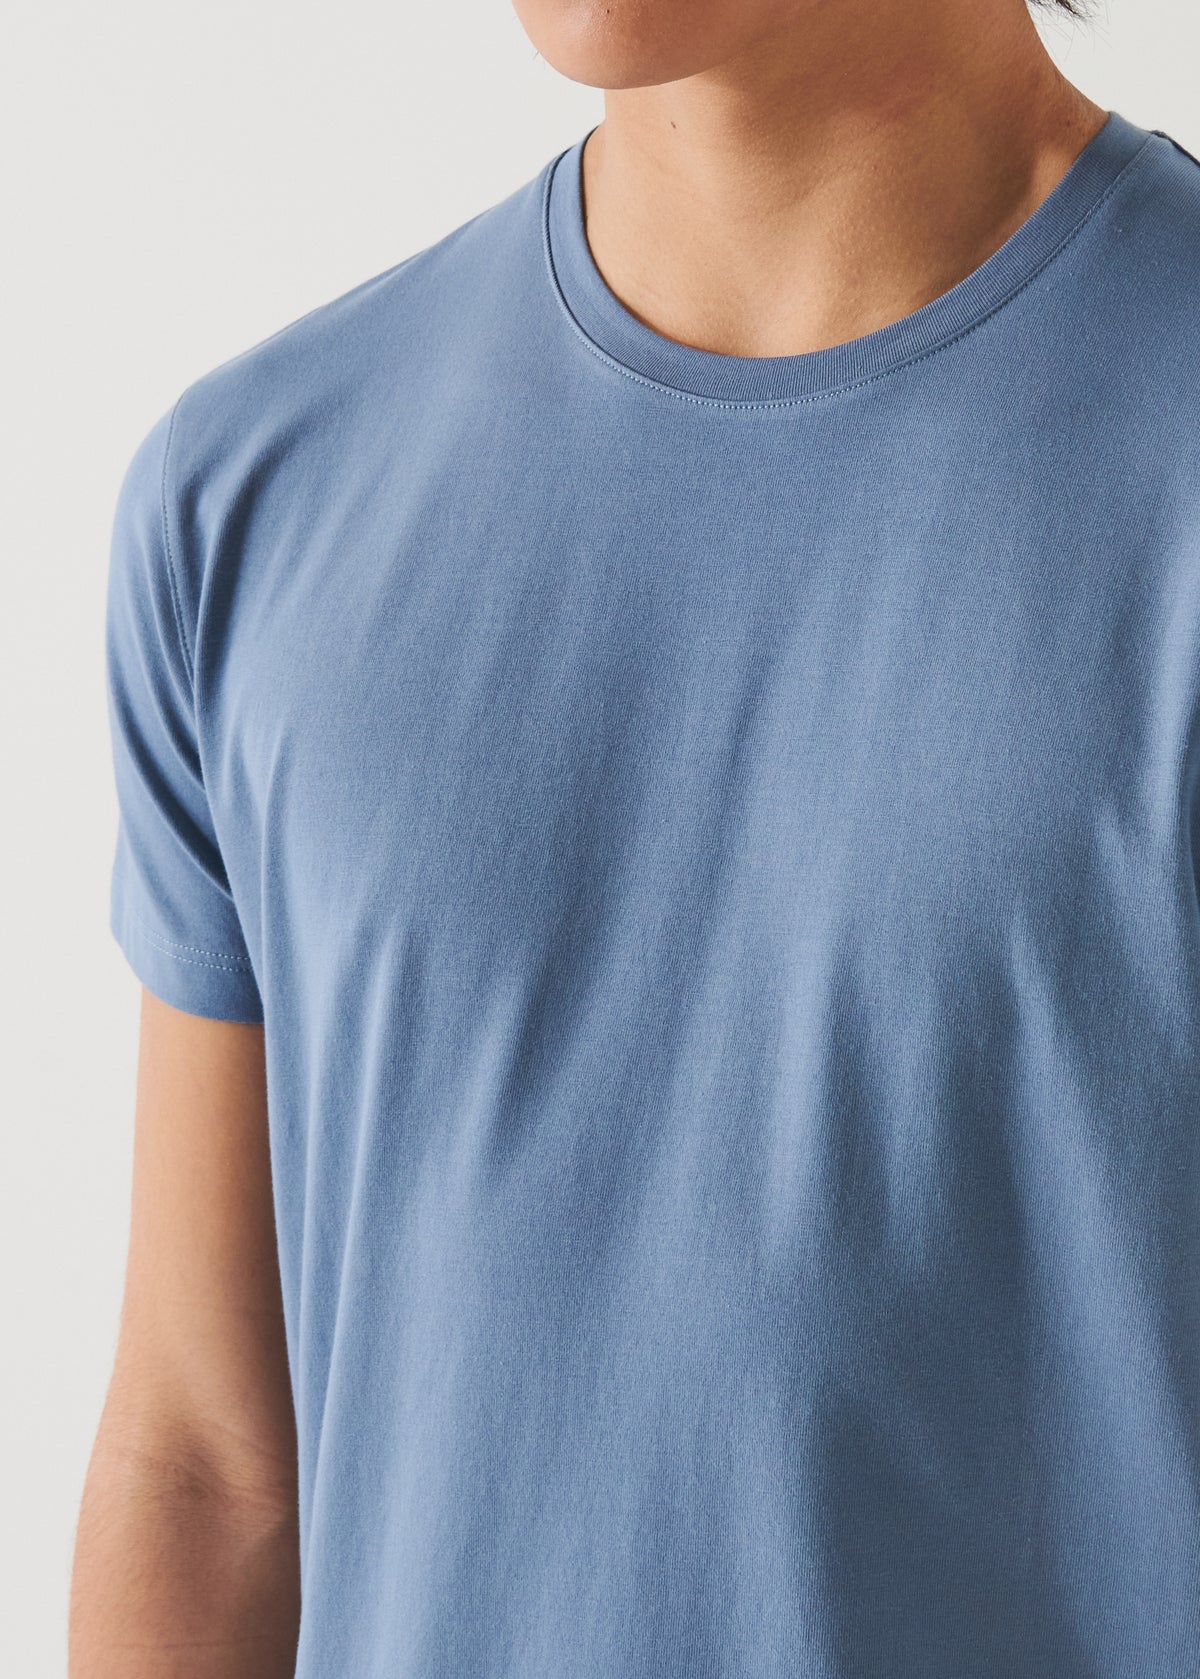 Patrick Assaraf Iconic Pima Cotton Stretch T-Shirt in Blue Steel